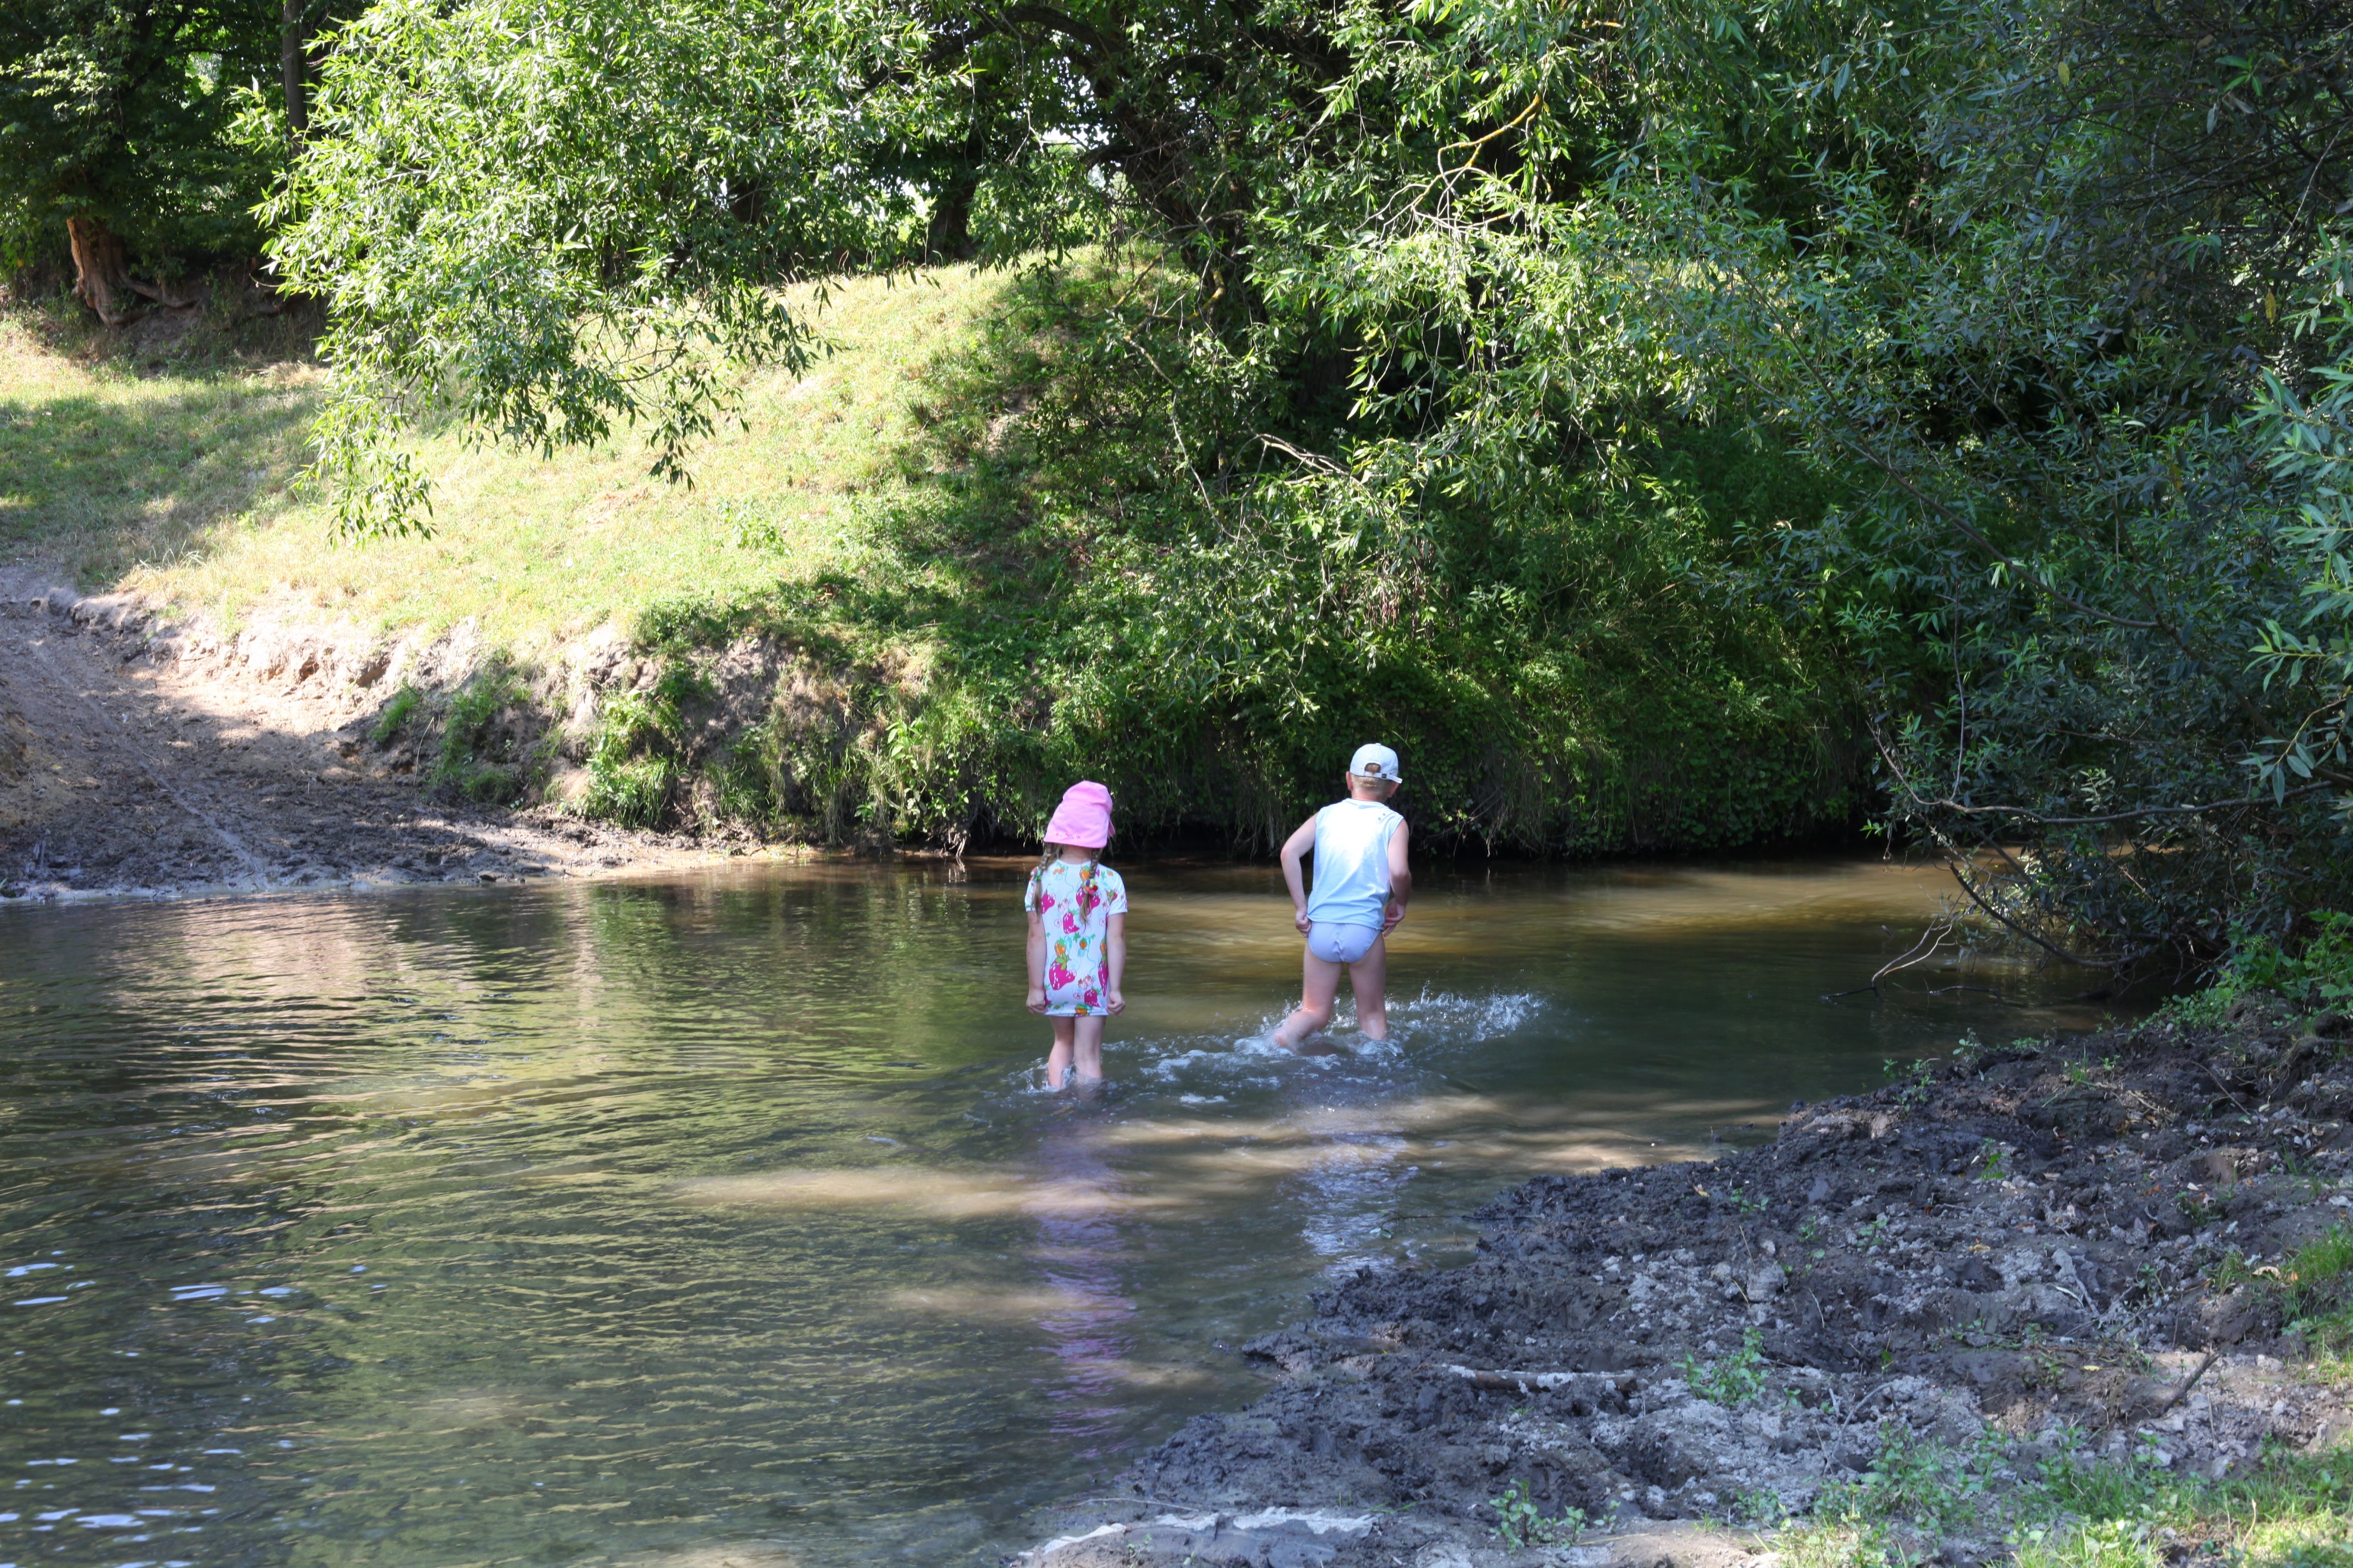 Children walking in a river